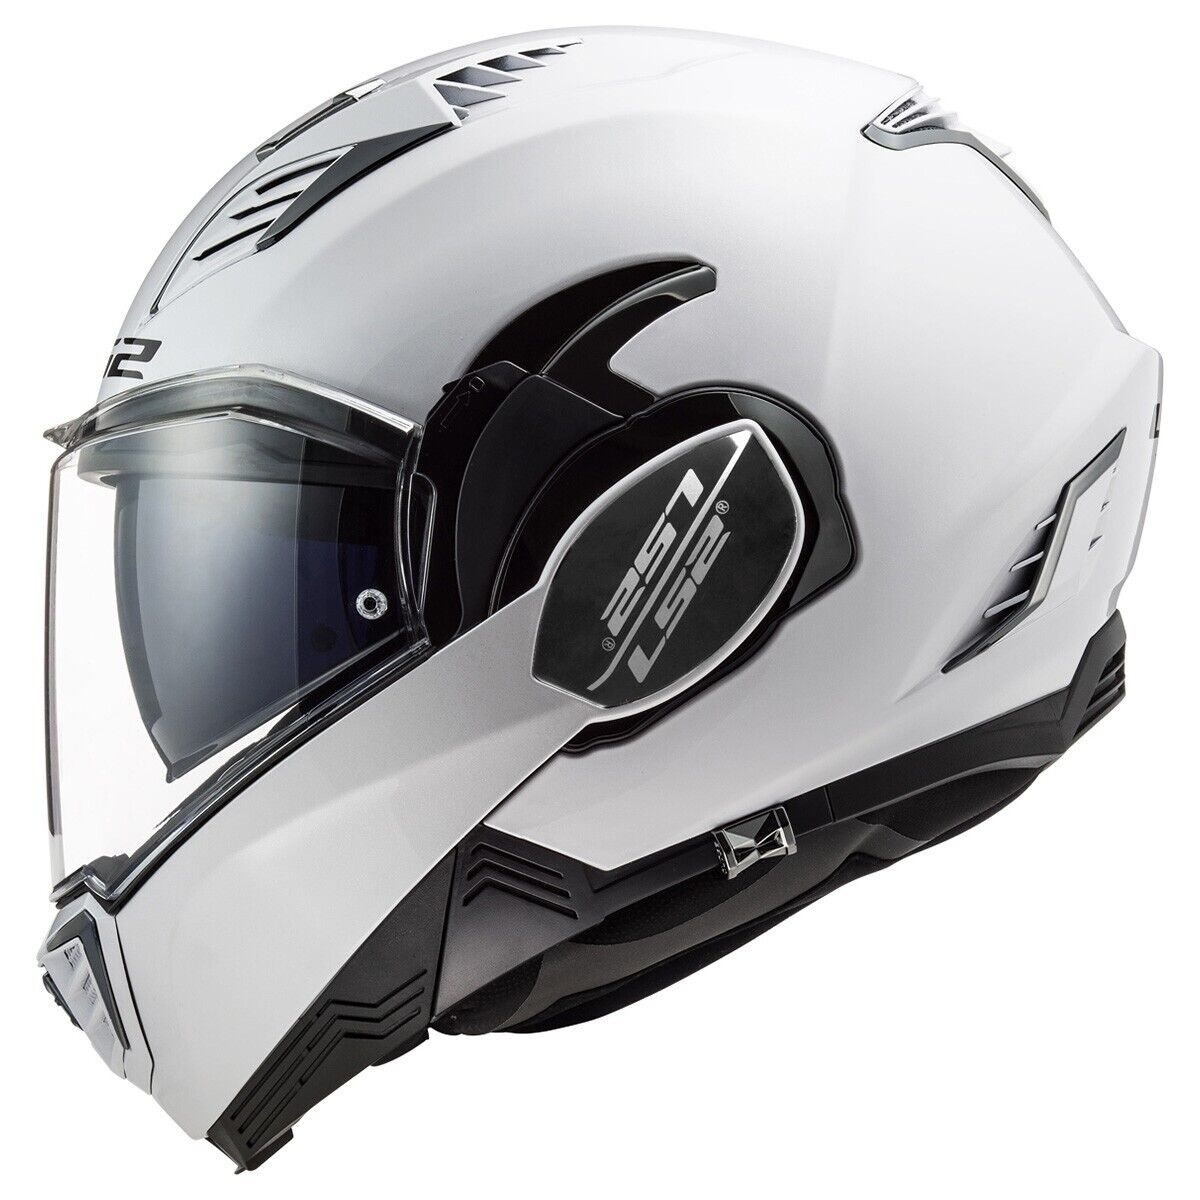 LS2 Helmet Valiant II Modular Helmet XS (Extra Small) 900-1021